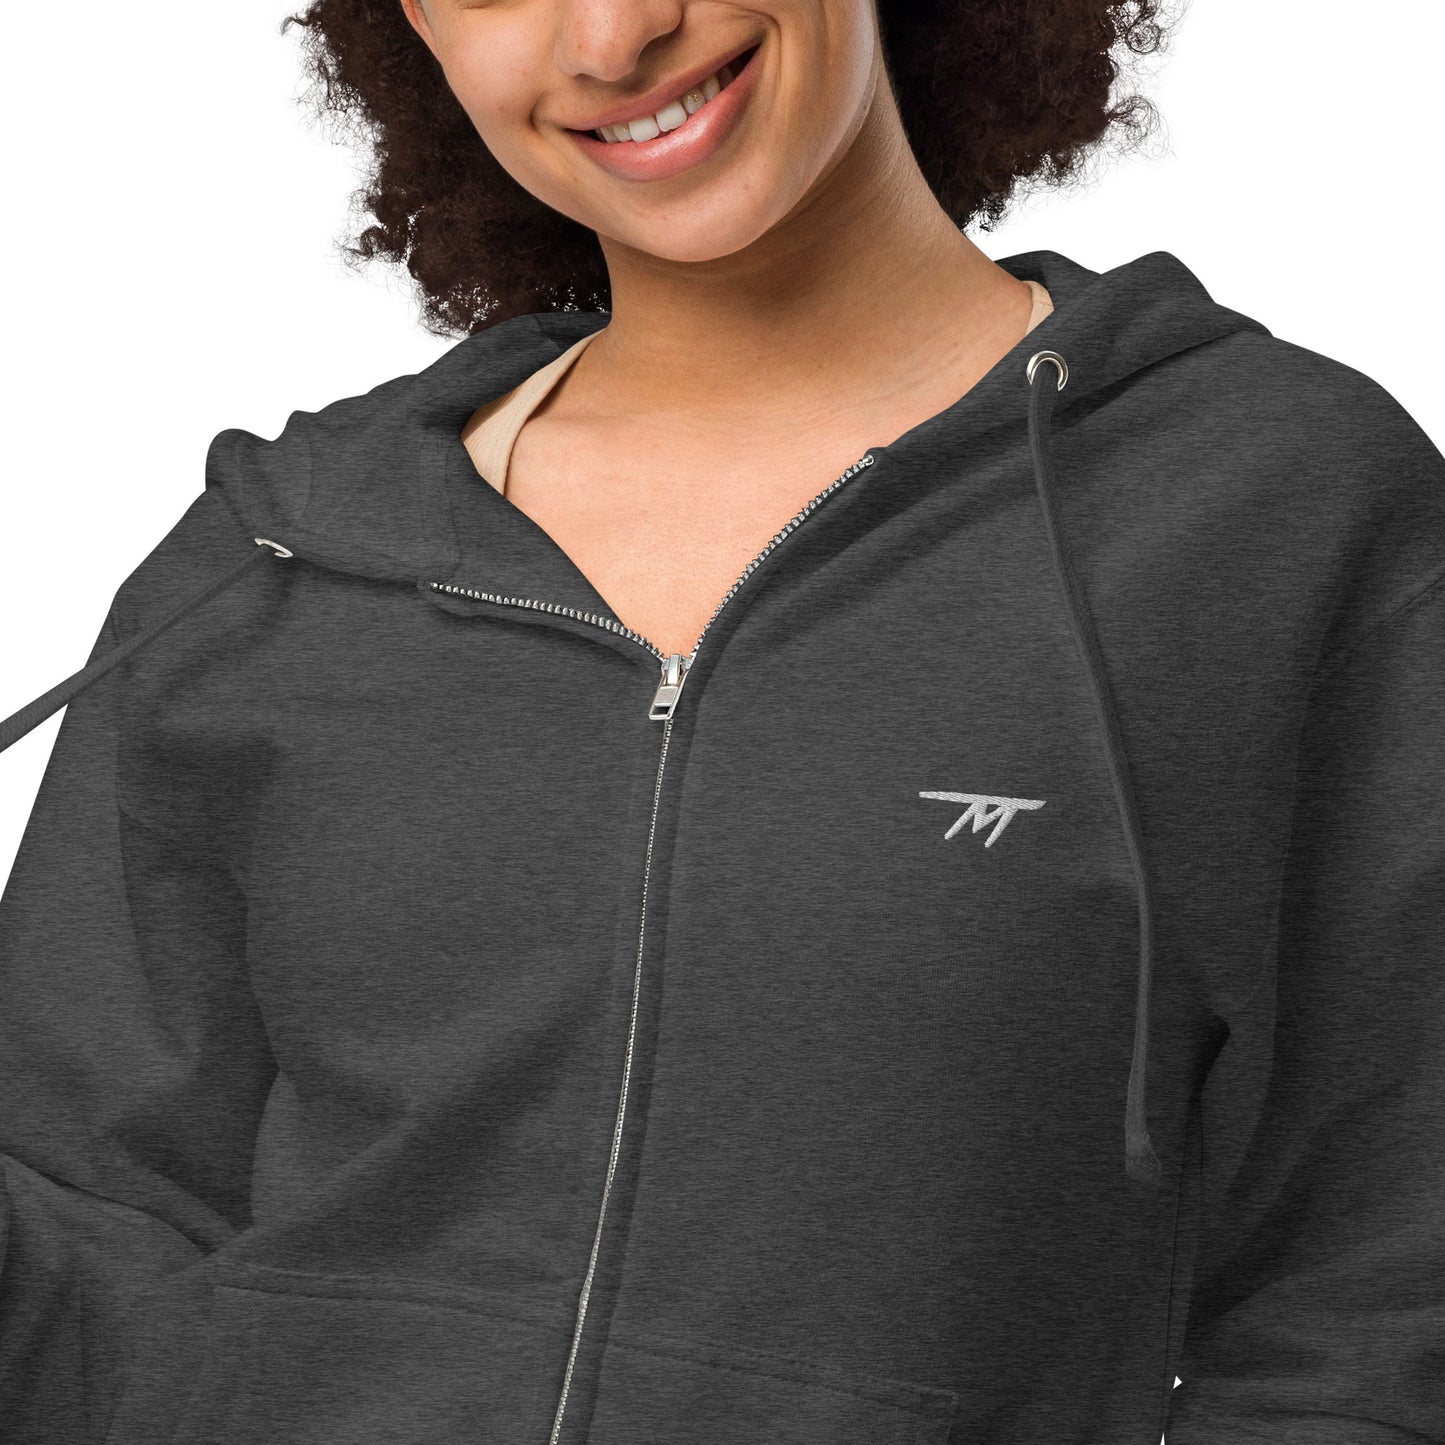 Onyx Fairy hoodie - Unisex fleece zip up